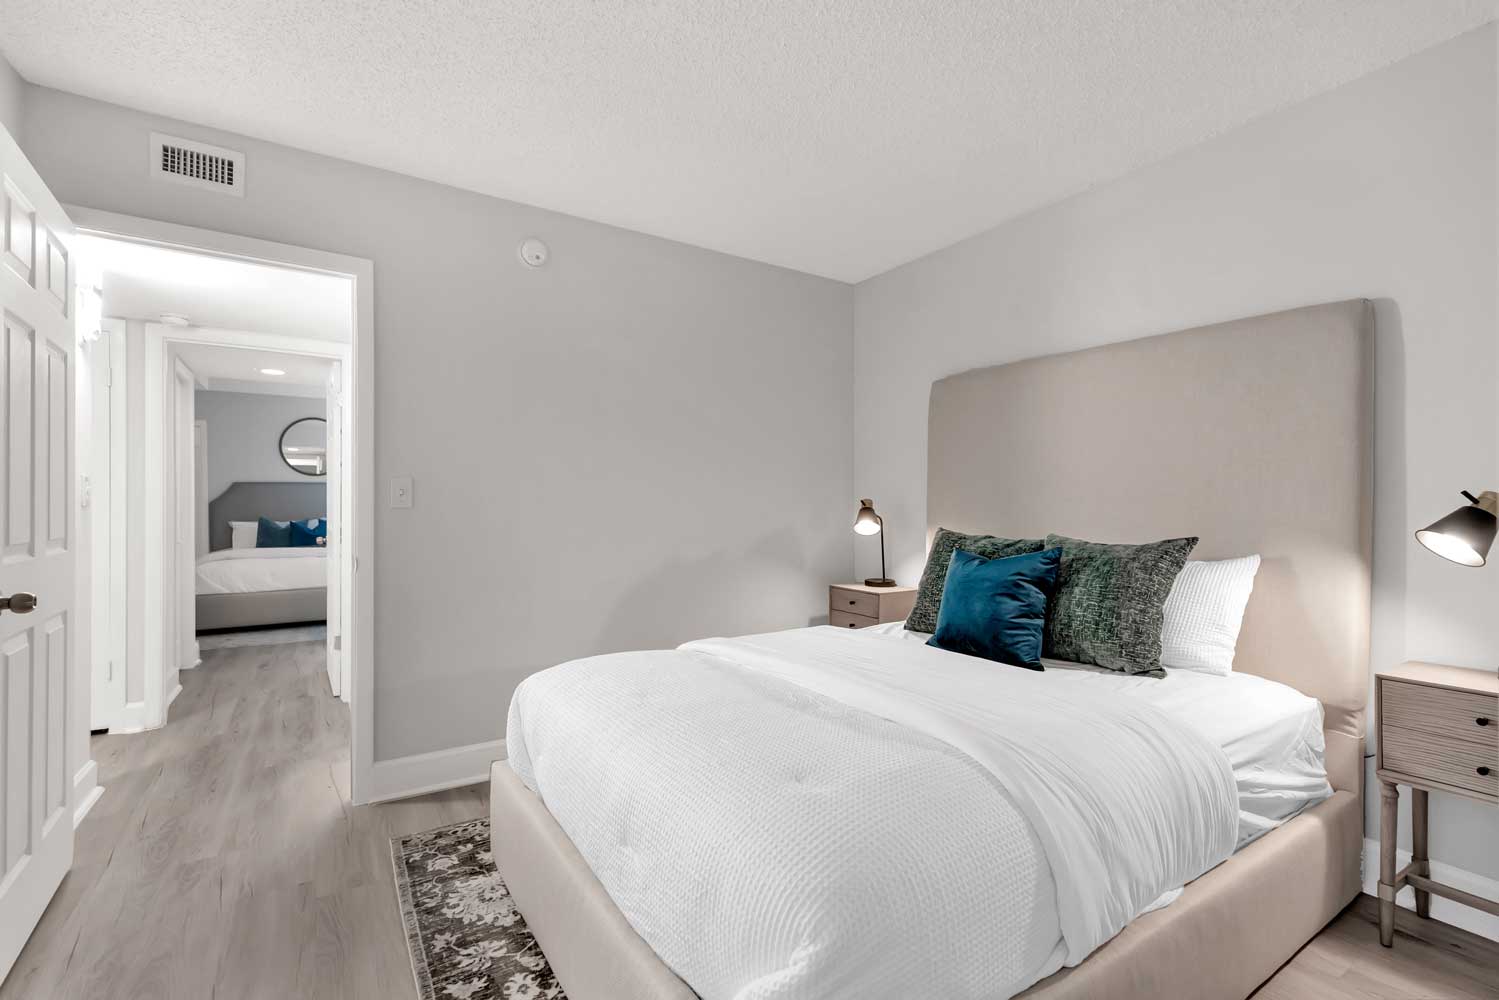 Bedroom at Nottingham Pine Apartments in Plantation, FL